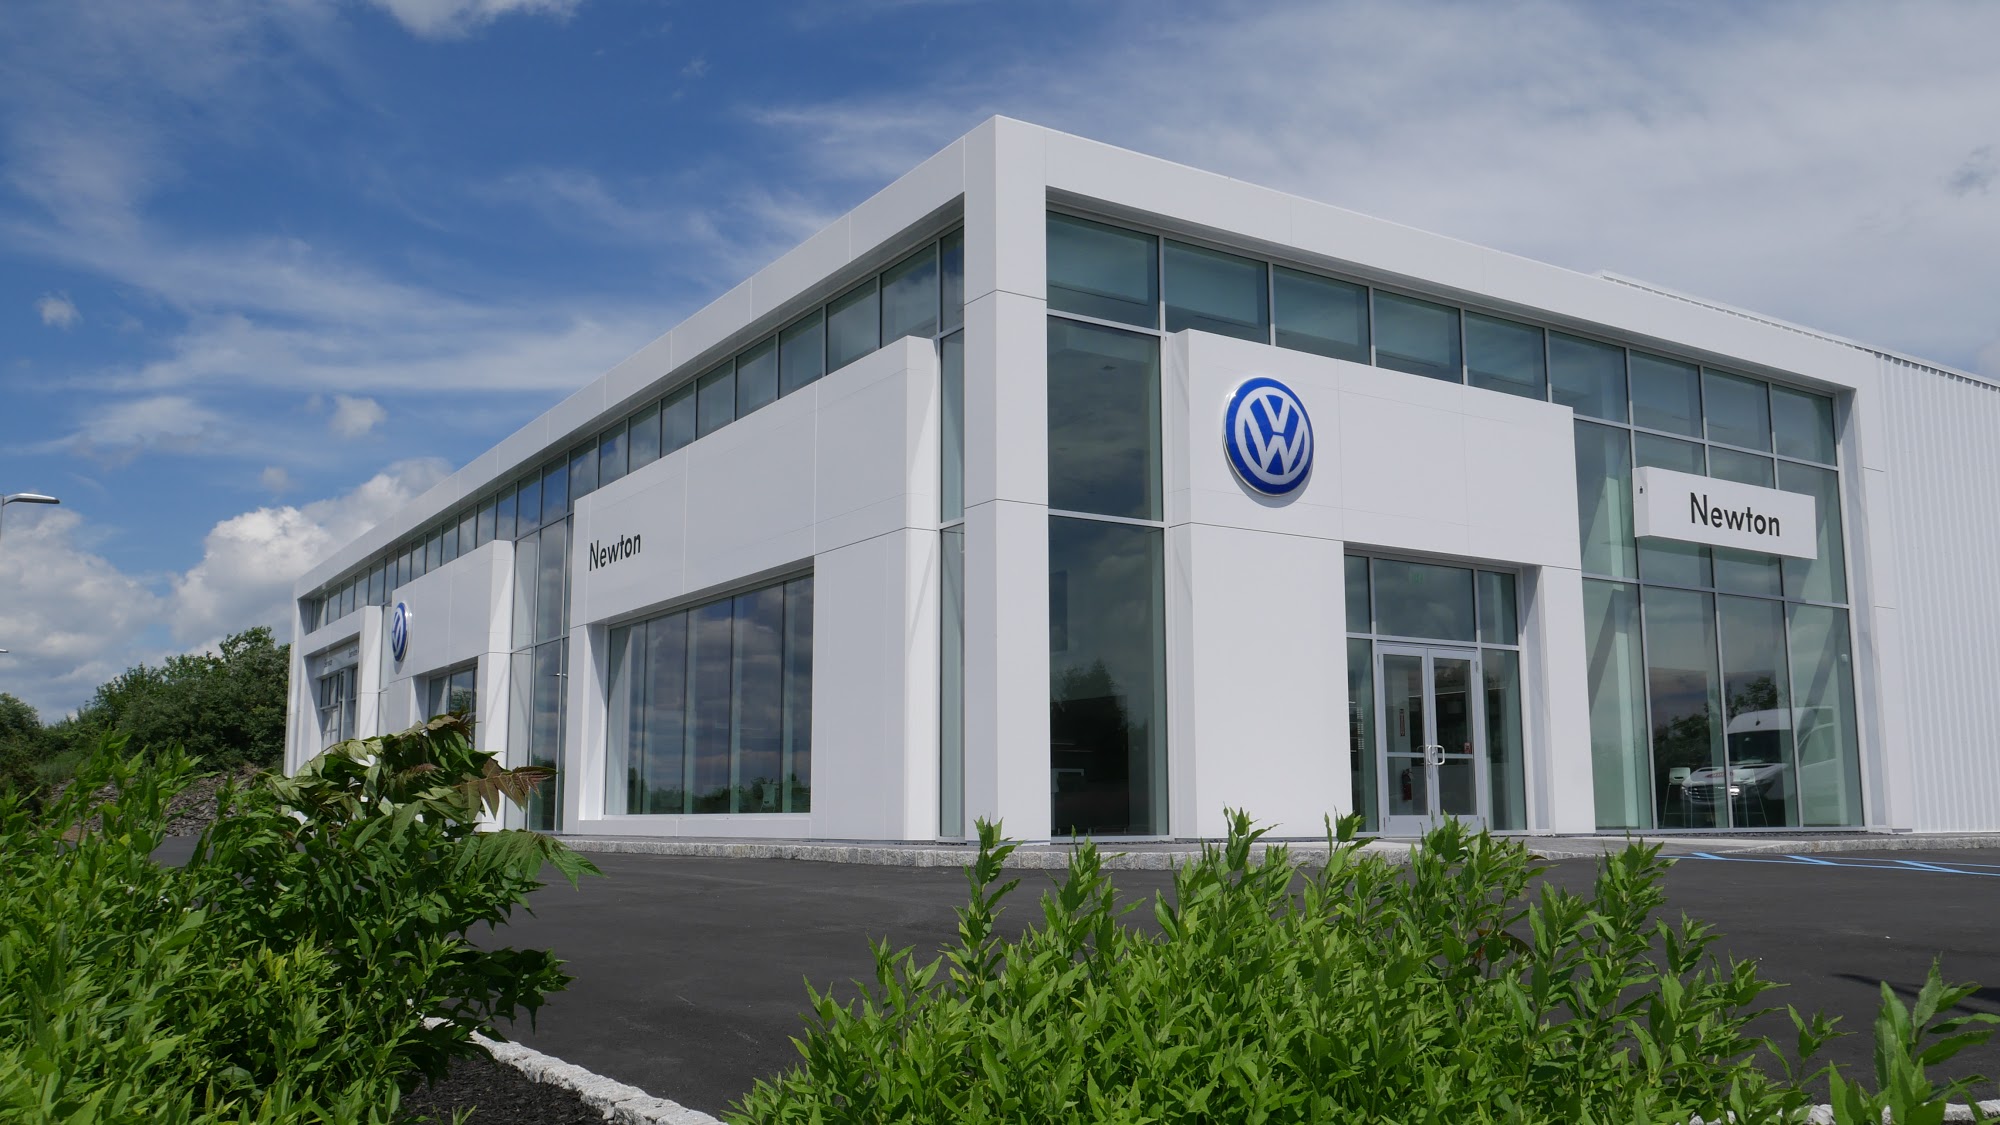 Volkswagen World of Newton